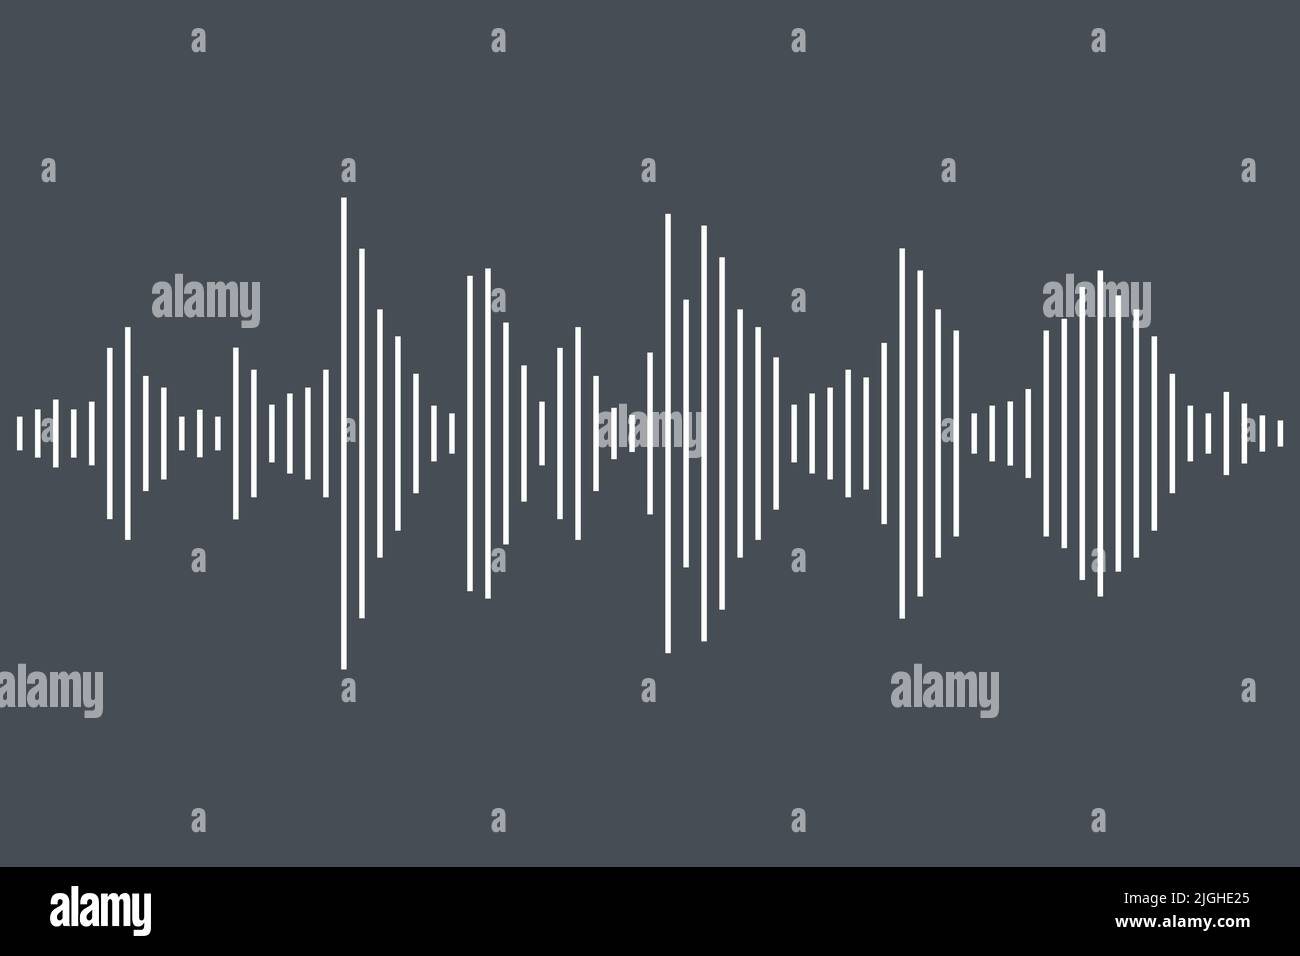 Audio levels simple vector. Sound wave display. Audio waveform graphics. Stock Vector